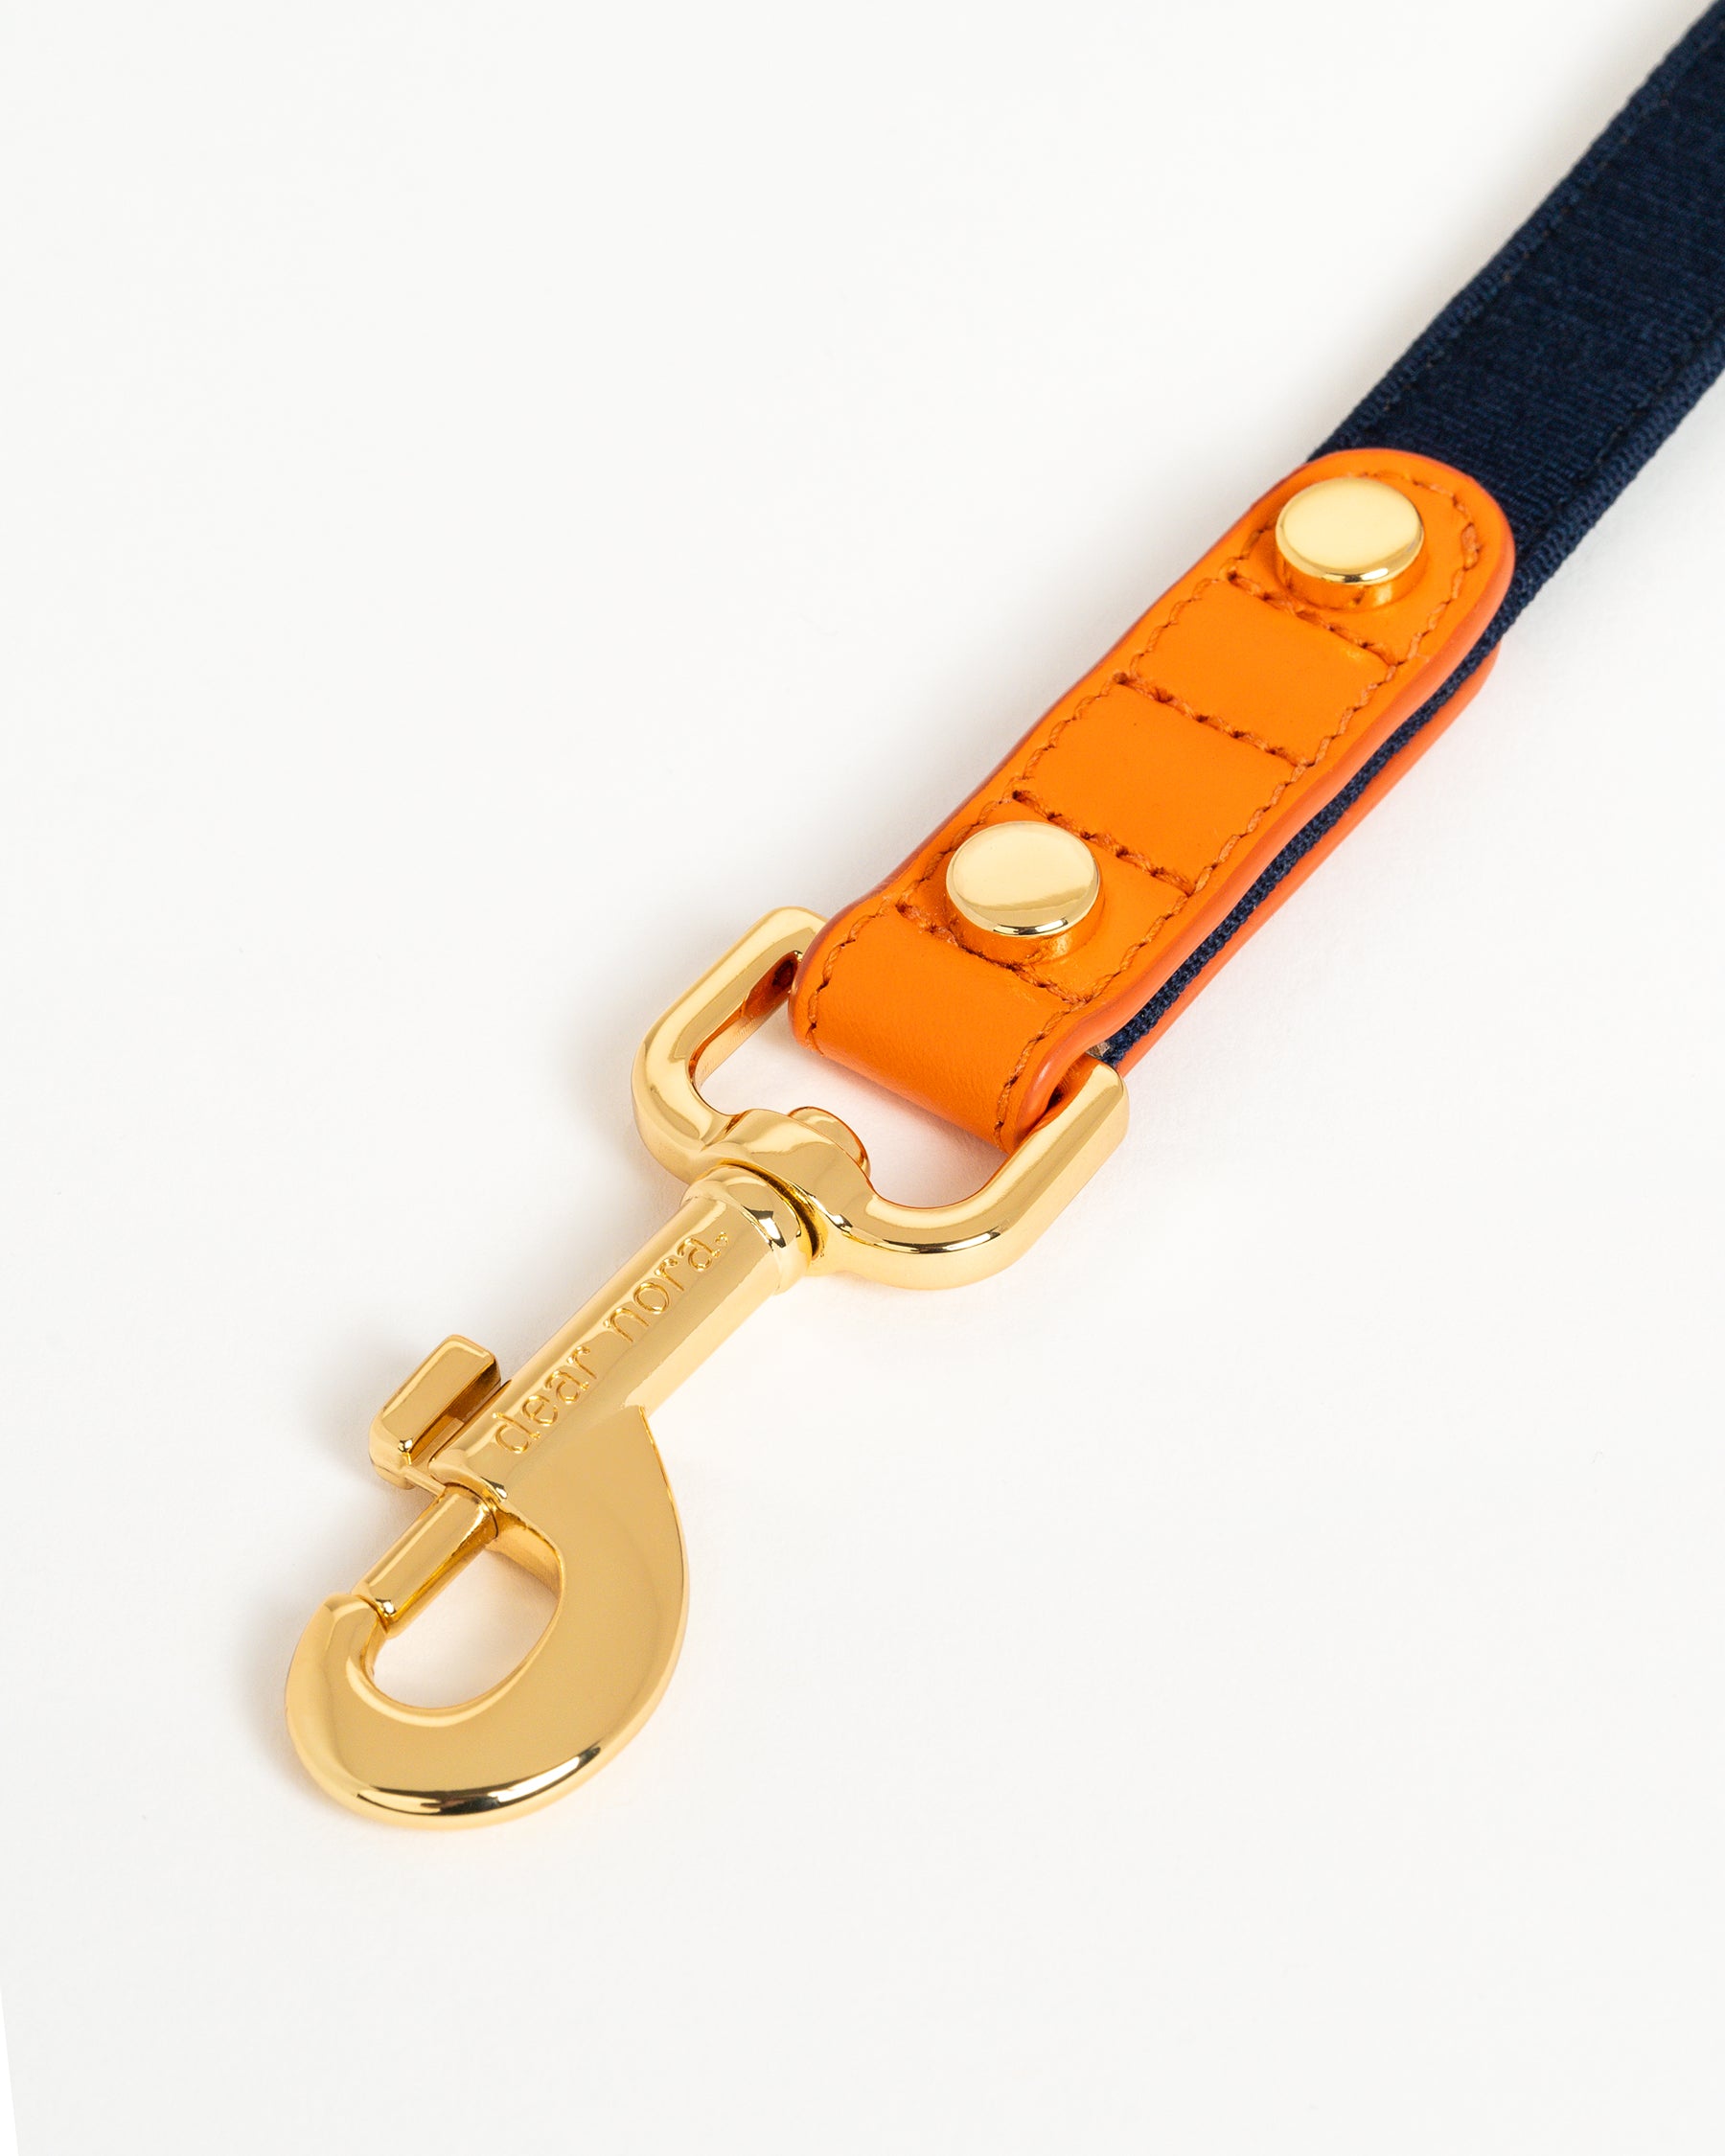 Dear Nora Tangerine dog leash hook - orange leather, navy blue fabric and 24k plated hardware - close up shot